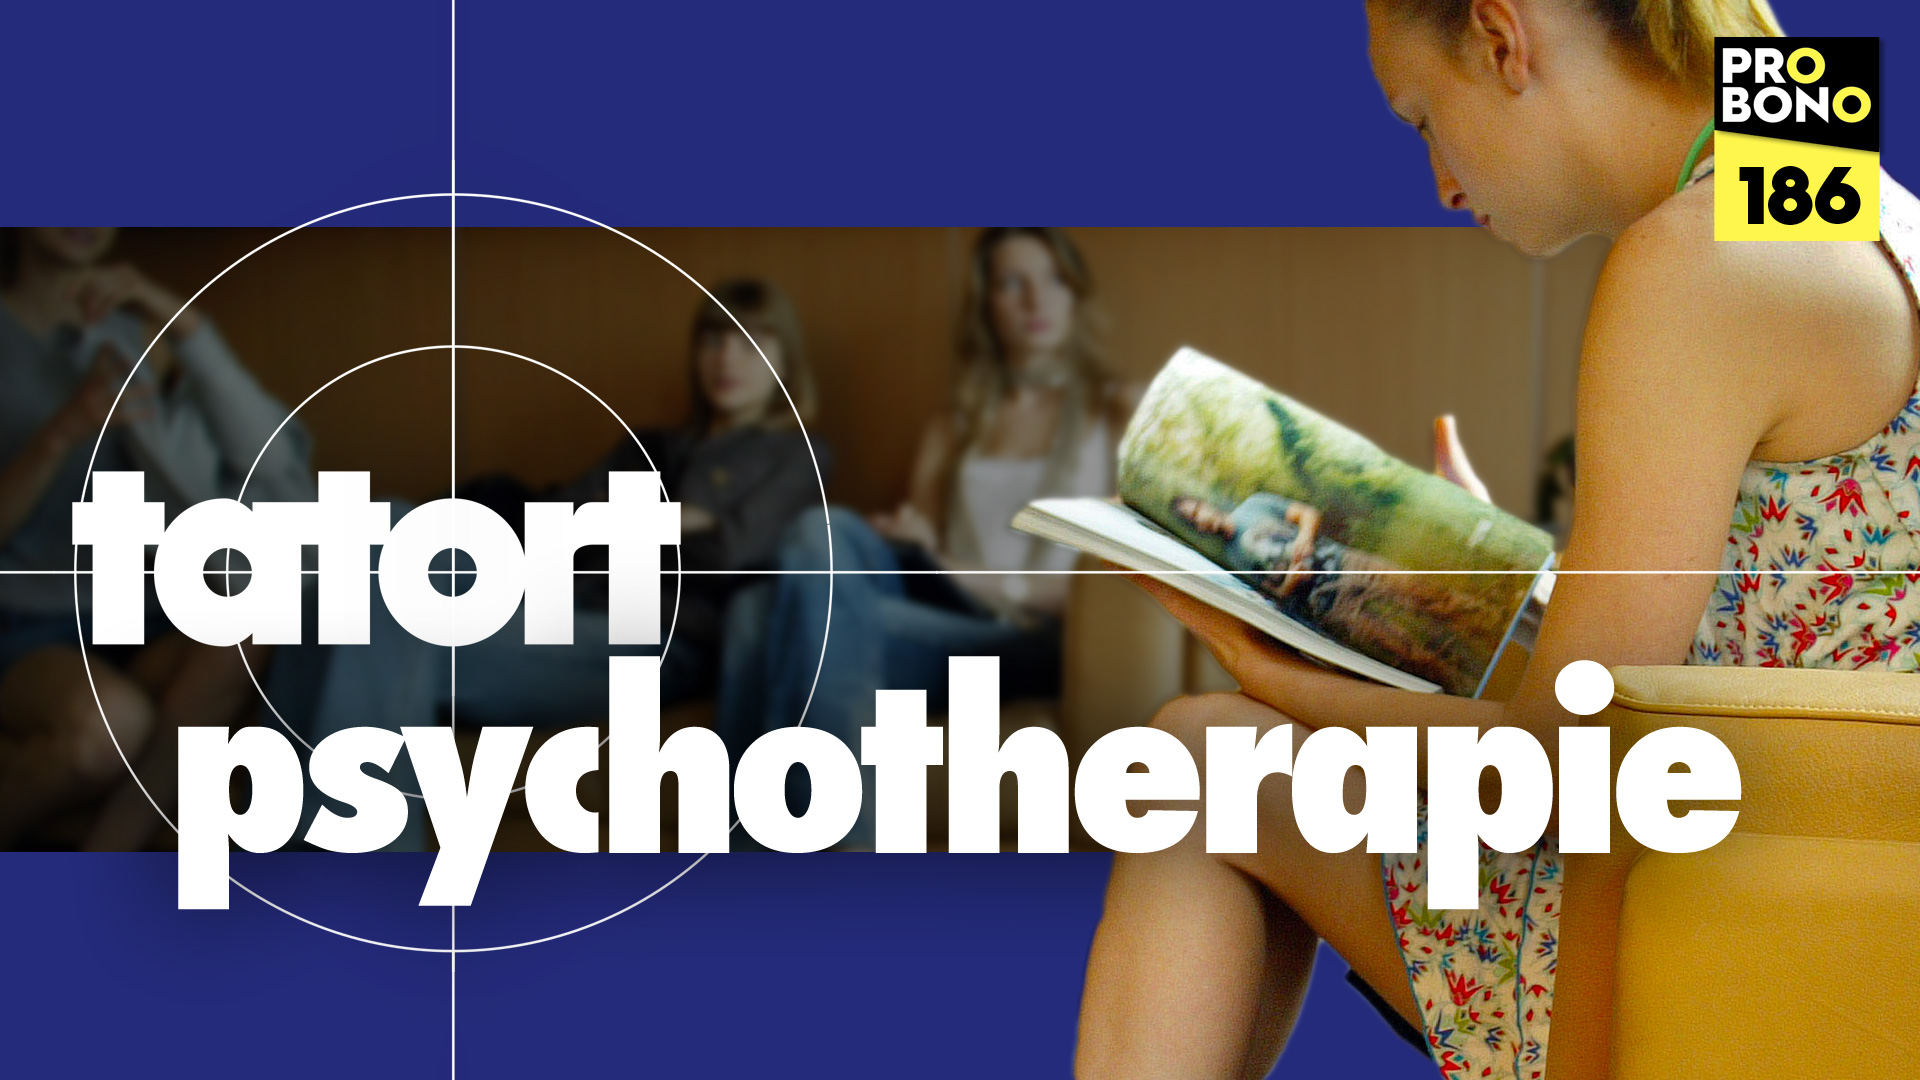 Tatort Psychotherapie (probono Magazin)